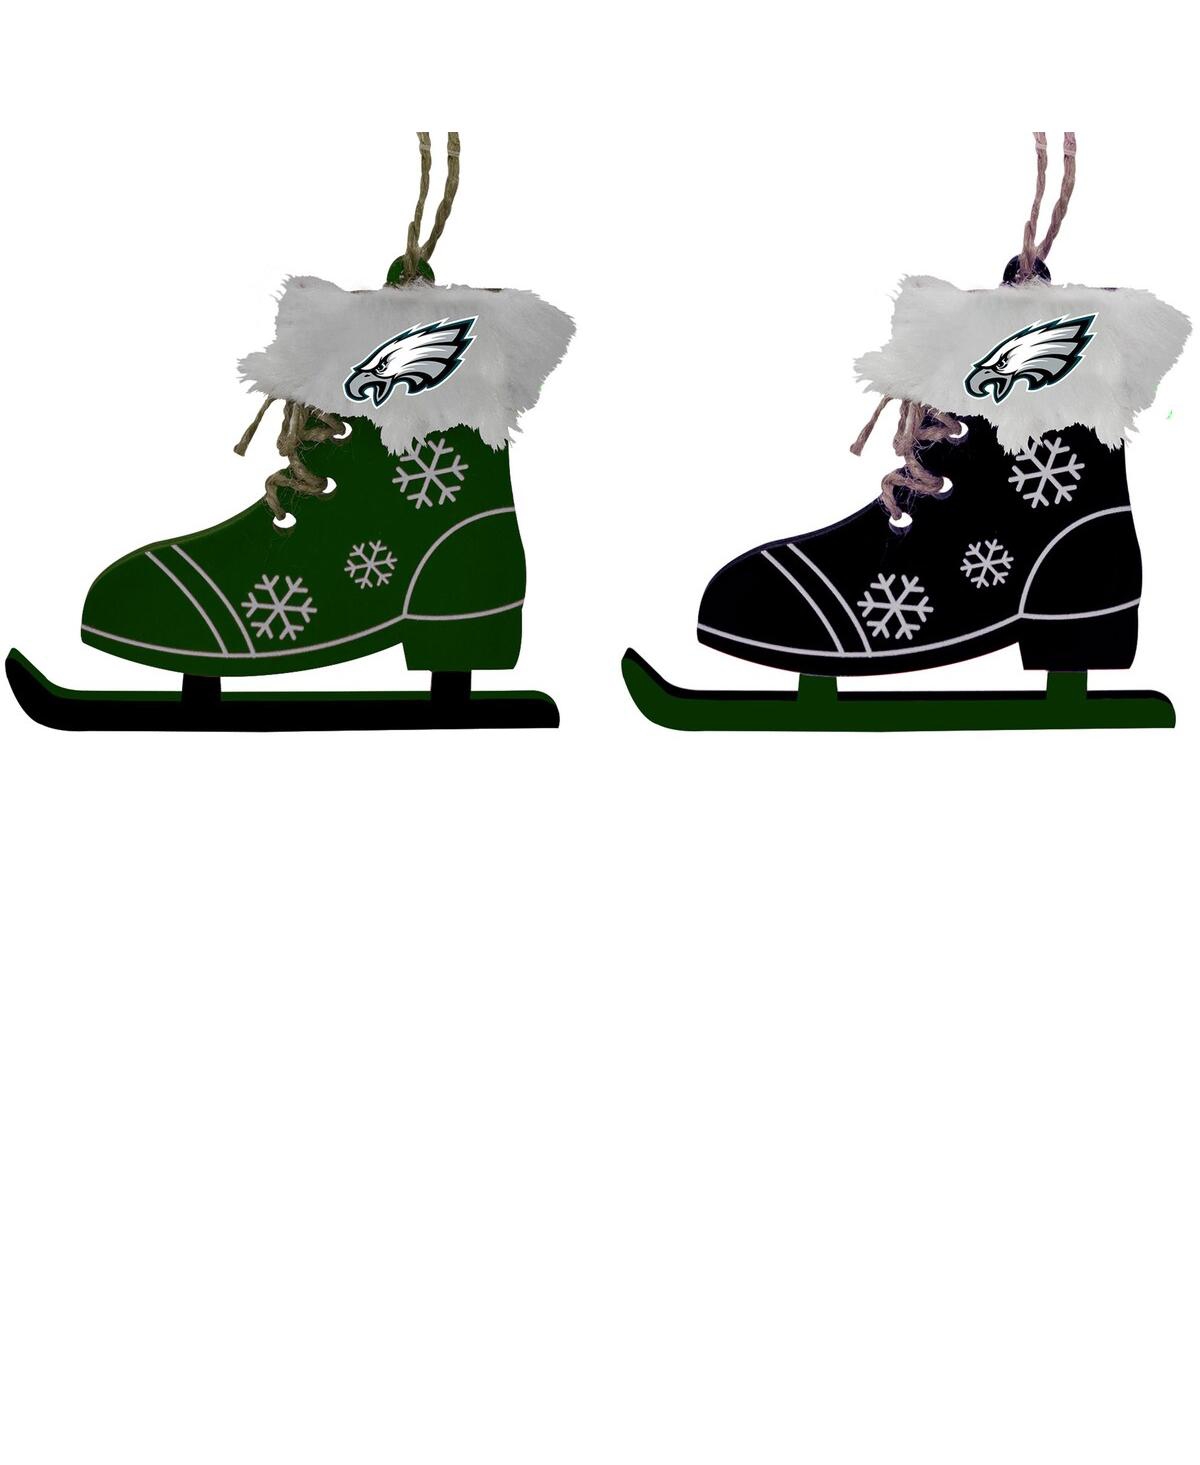 The Memory Company Philadelphia Eagles Two-Pack Ice Skate Ornament Set - Green, Black